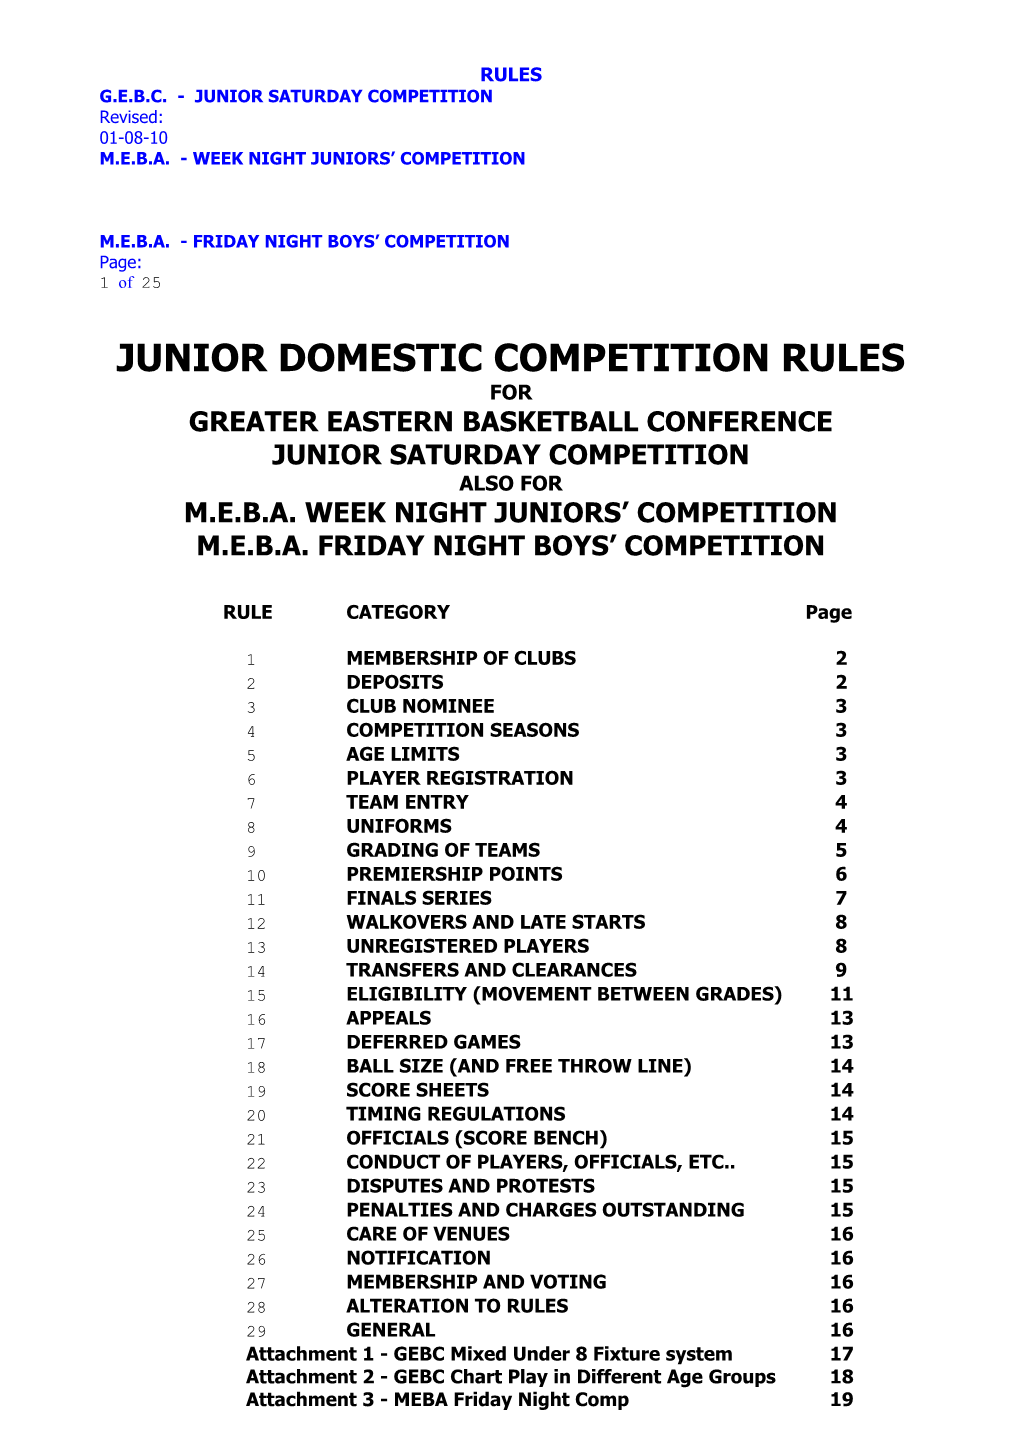 Greater Eastern Basketball League